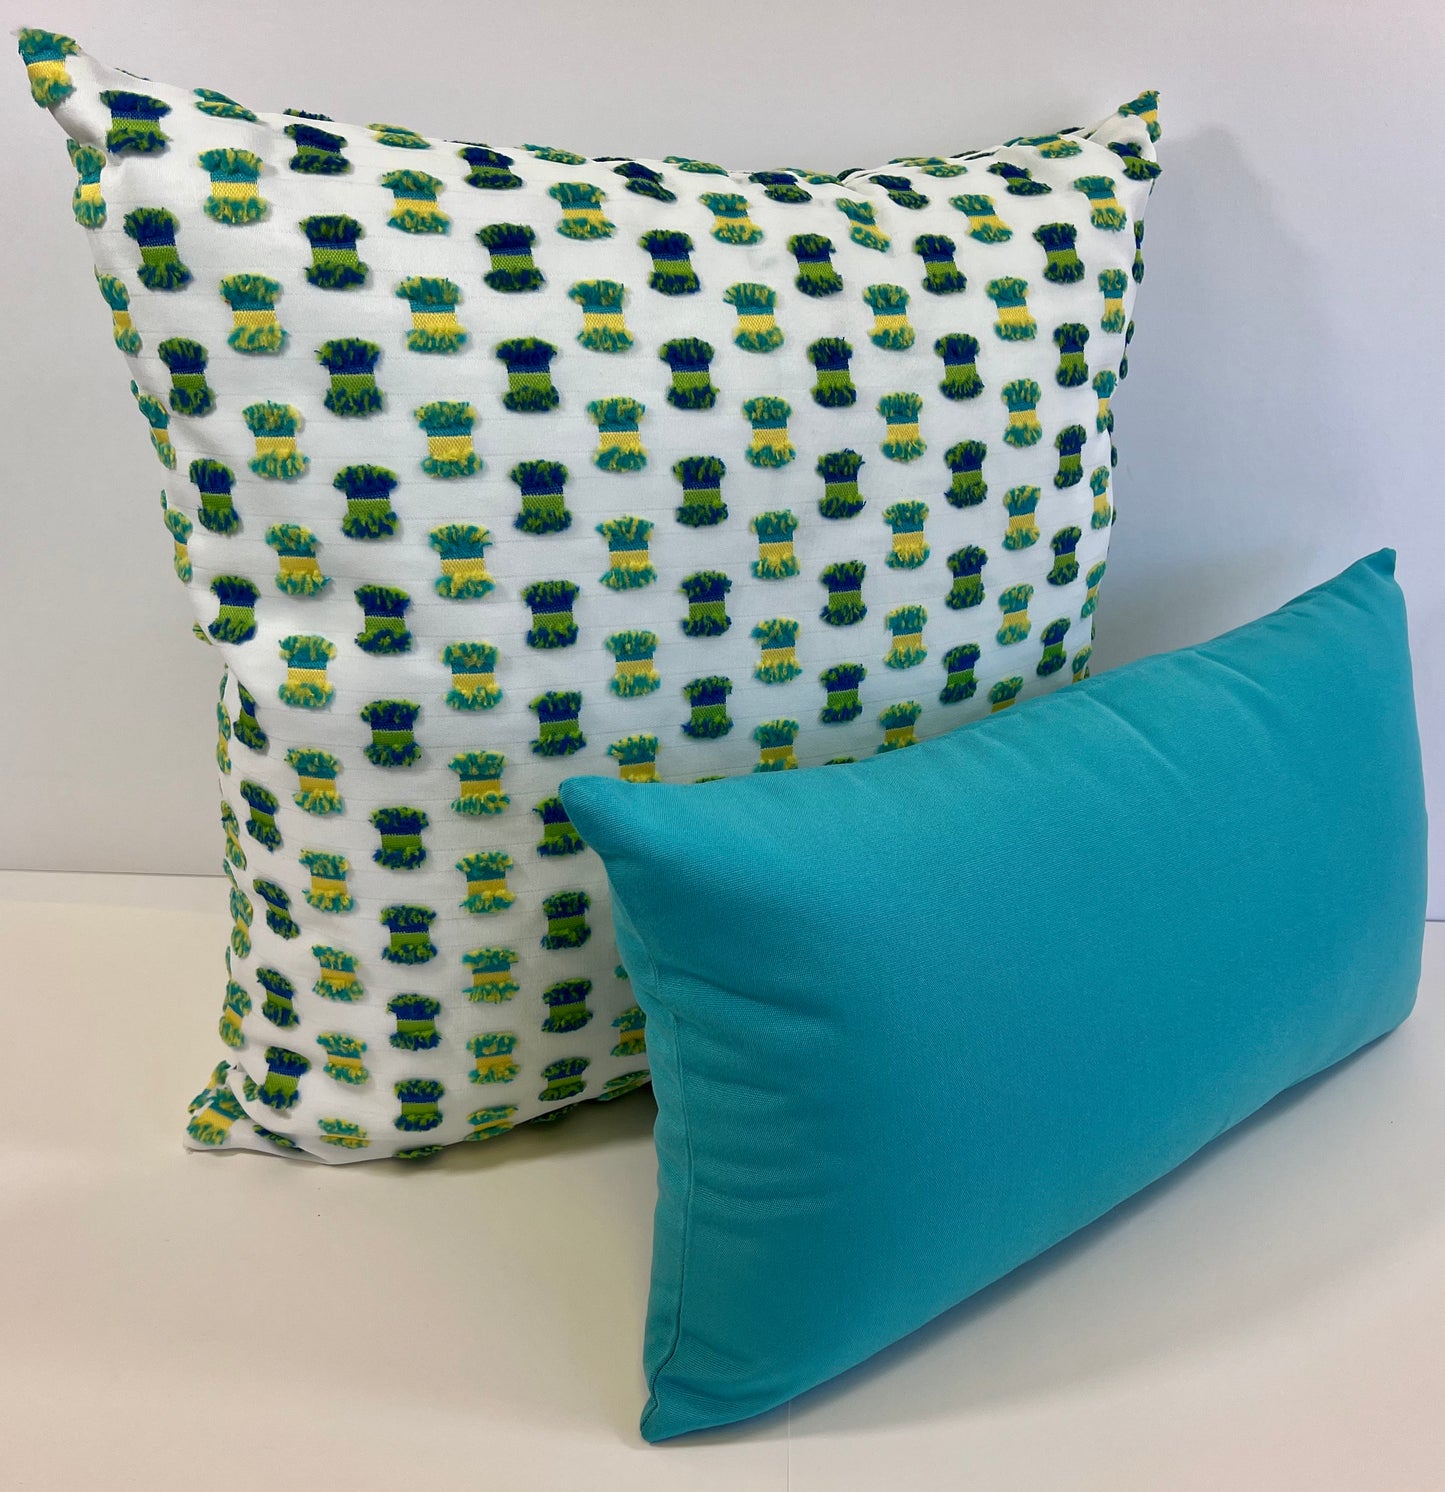 Luxury Outdoor Pillow - 22" x 22" - Fifi-Green; Sunbrella, or equivalent, fabric with fiber fill